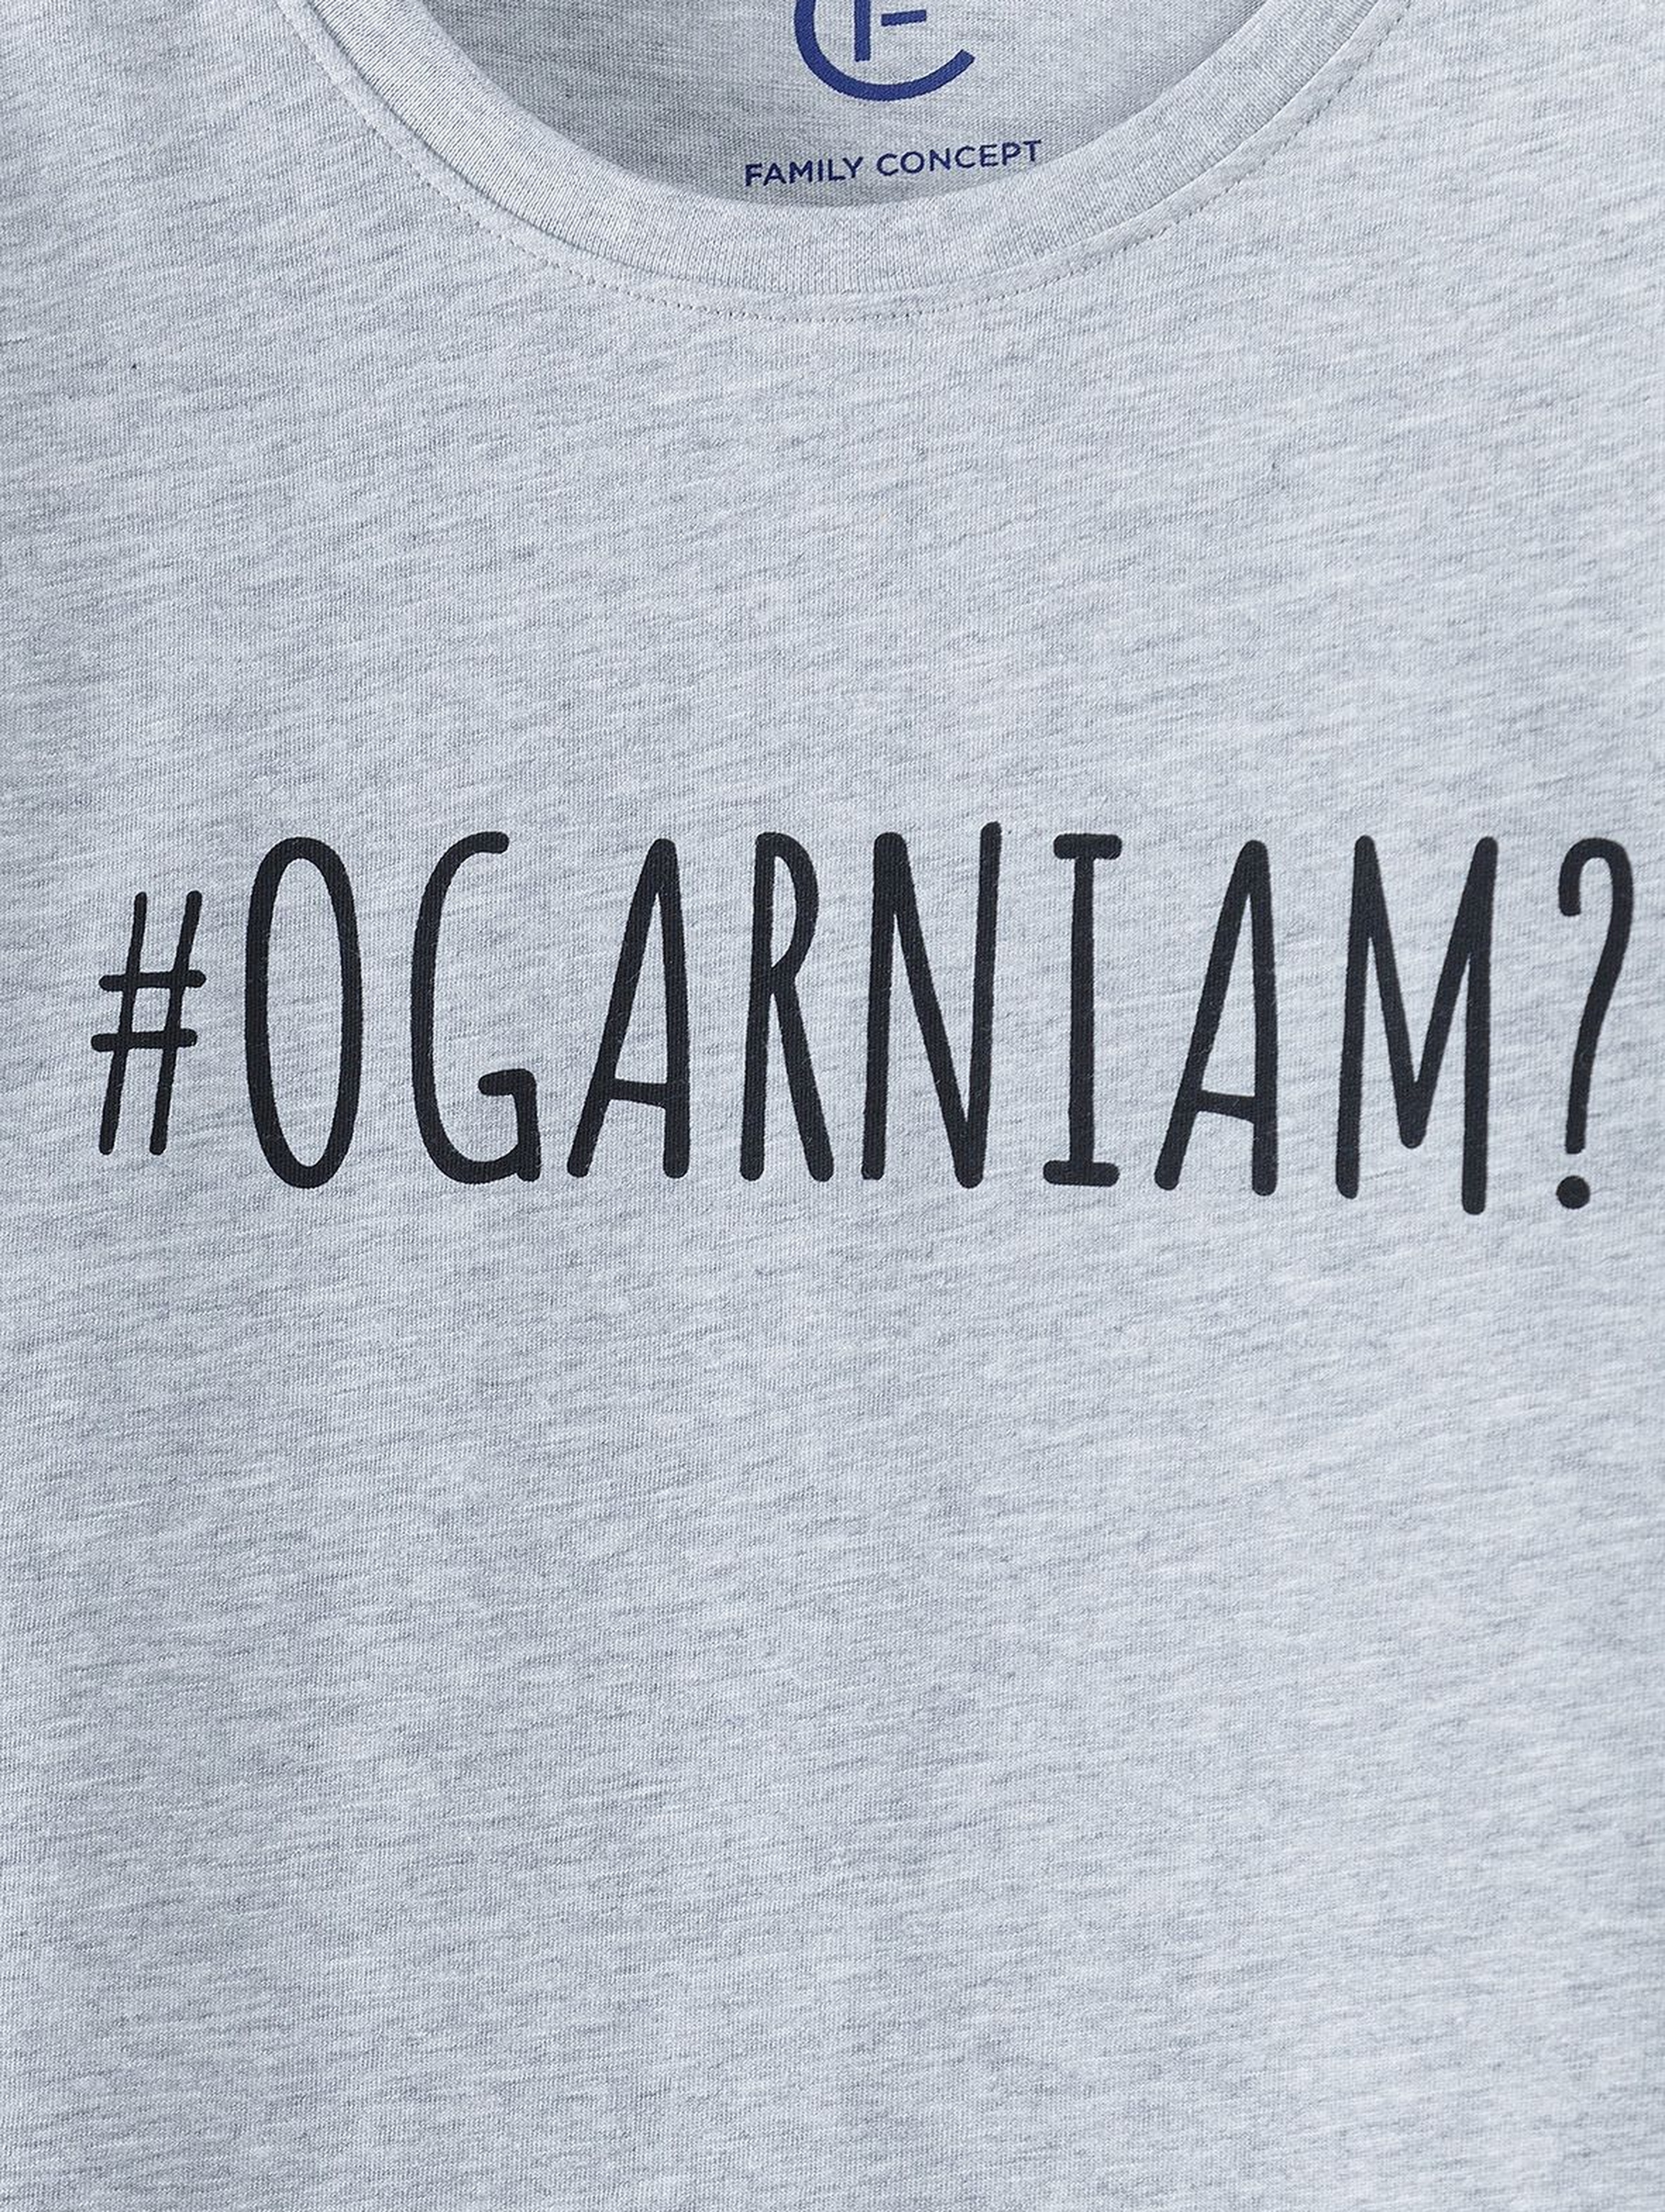 T-shirt męski z polskim napisem- #Ogarniam?